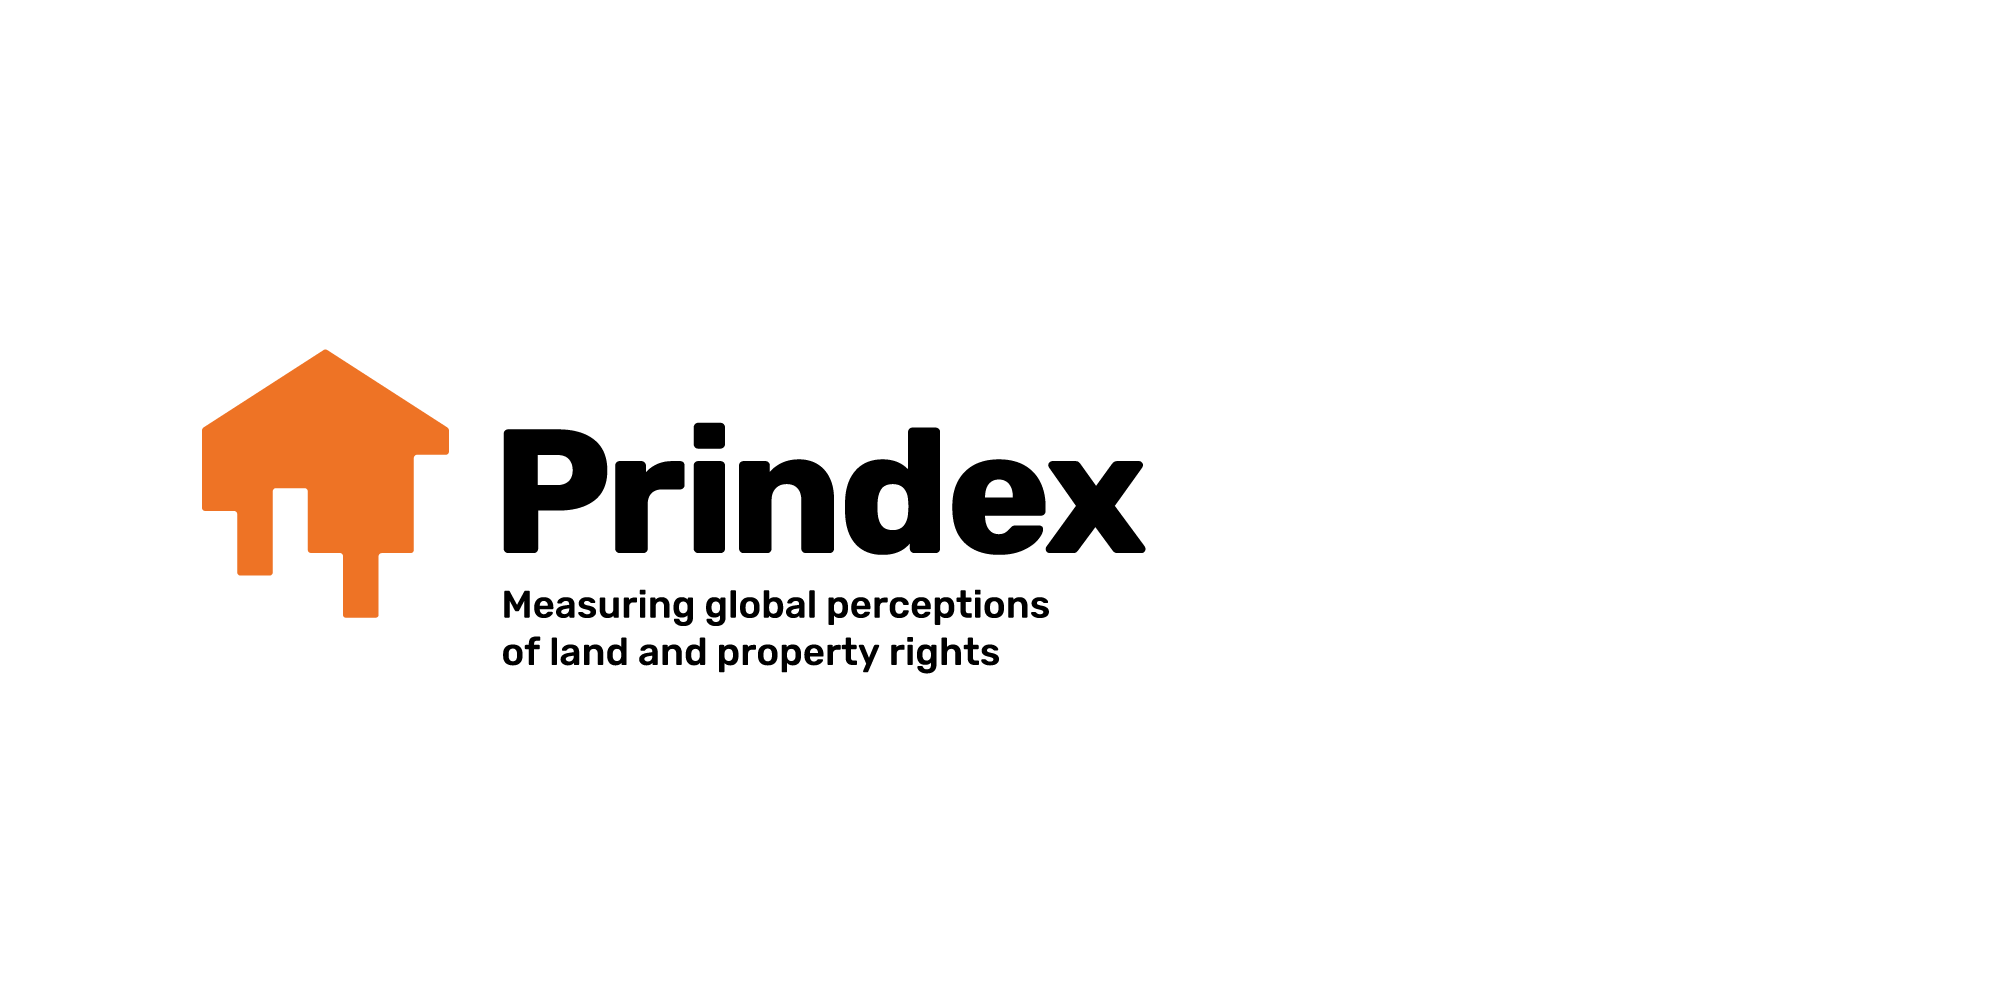 Prindex - Global Property Rights Index - 2019/2020 